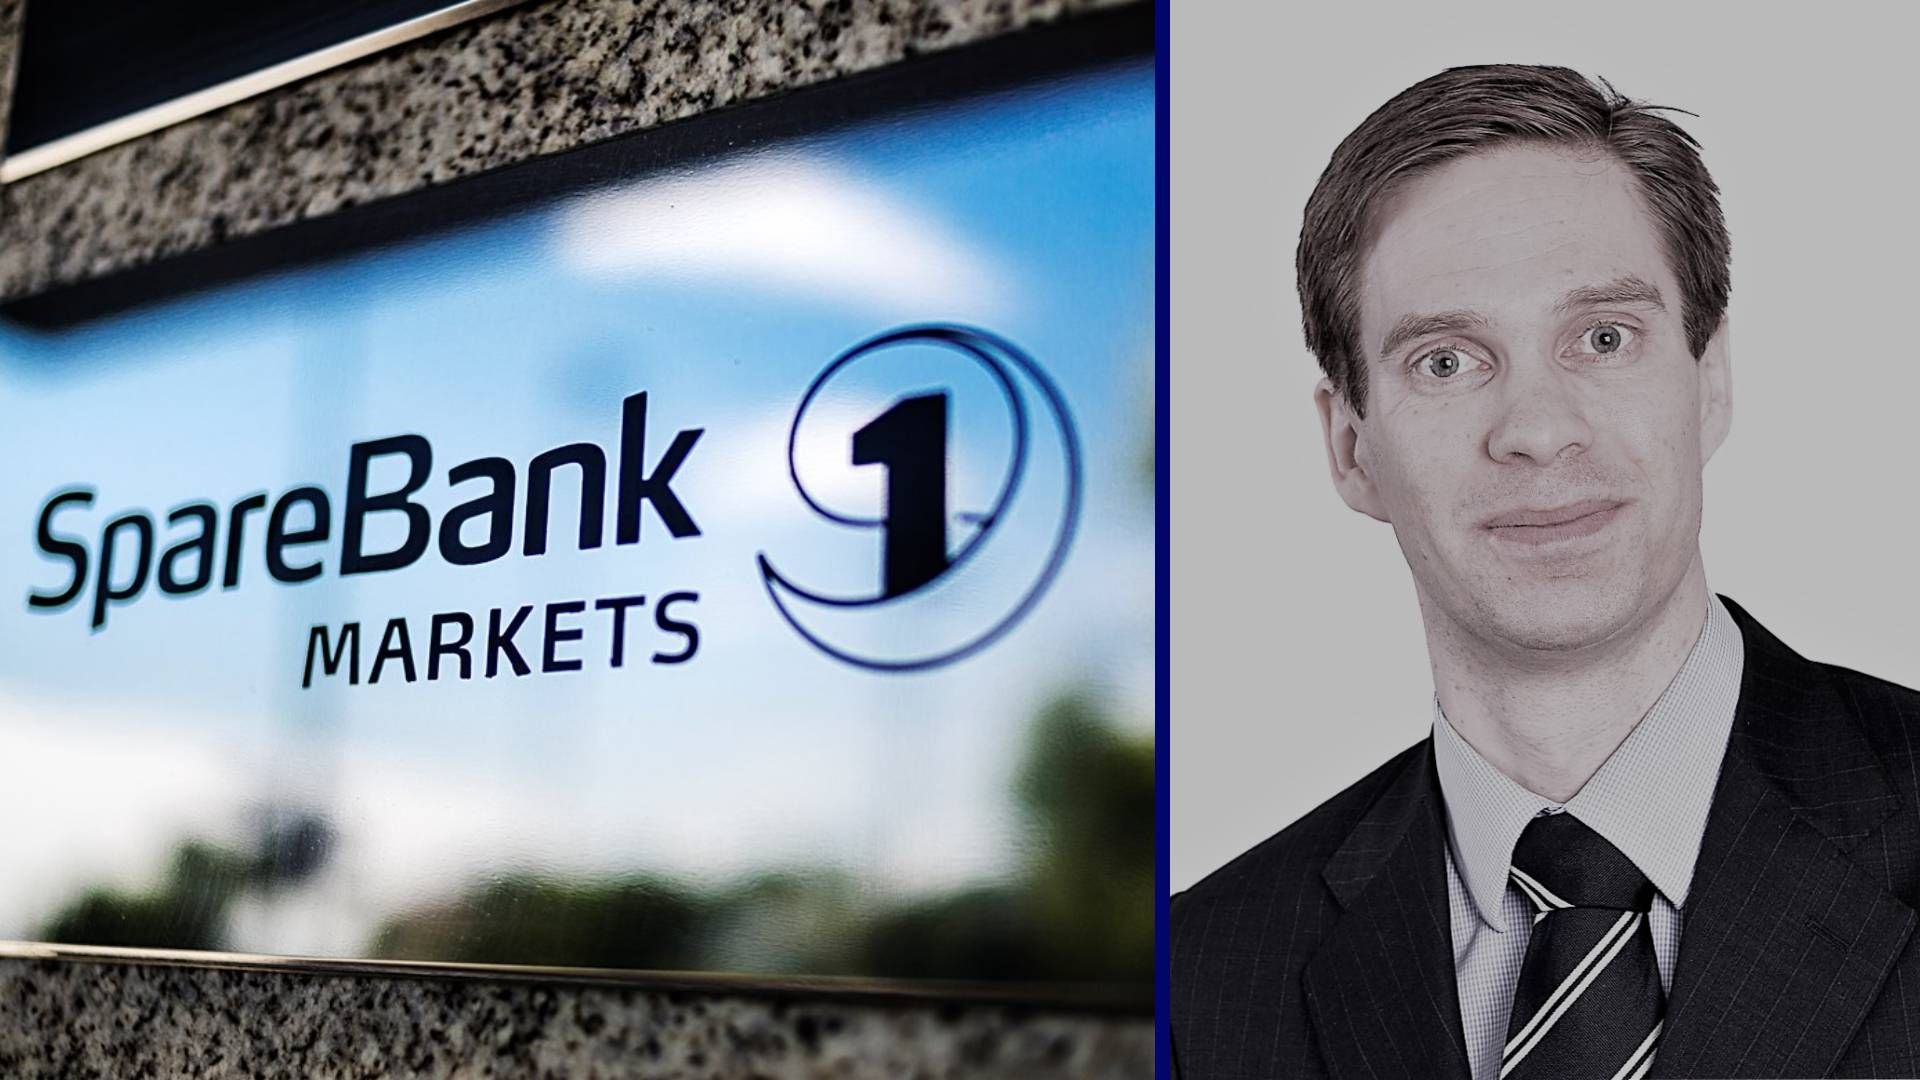 Finansanalytiker i Sparebank 1 Markets, Nils Christian Øyen. | Foto: Sparebank 1 Markets